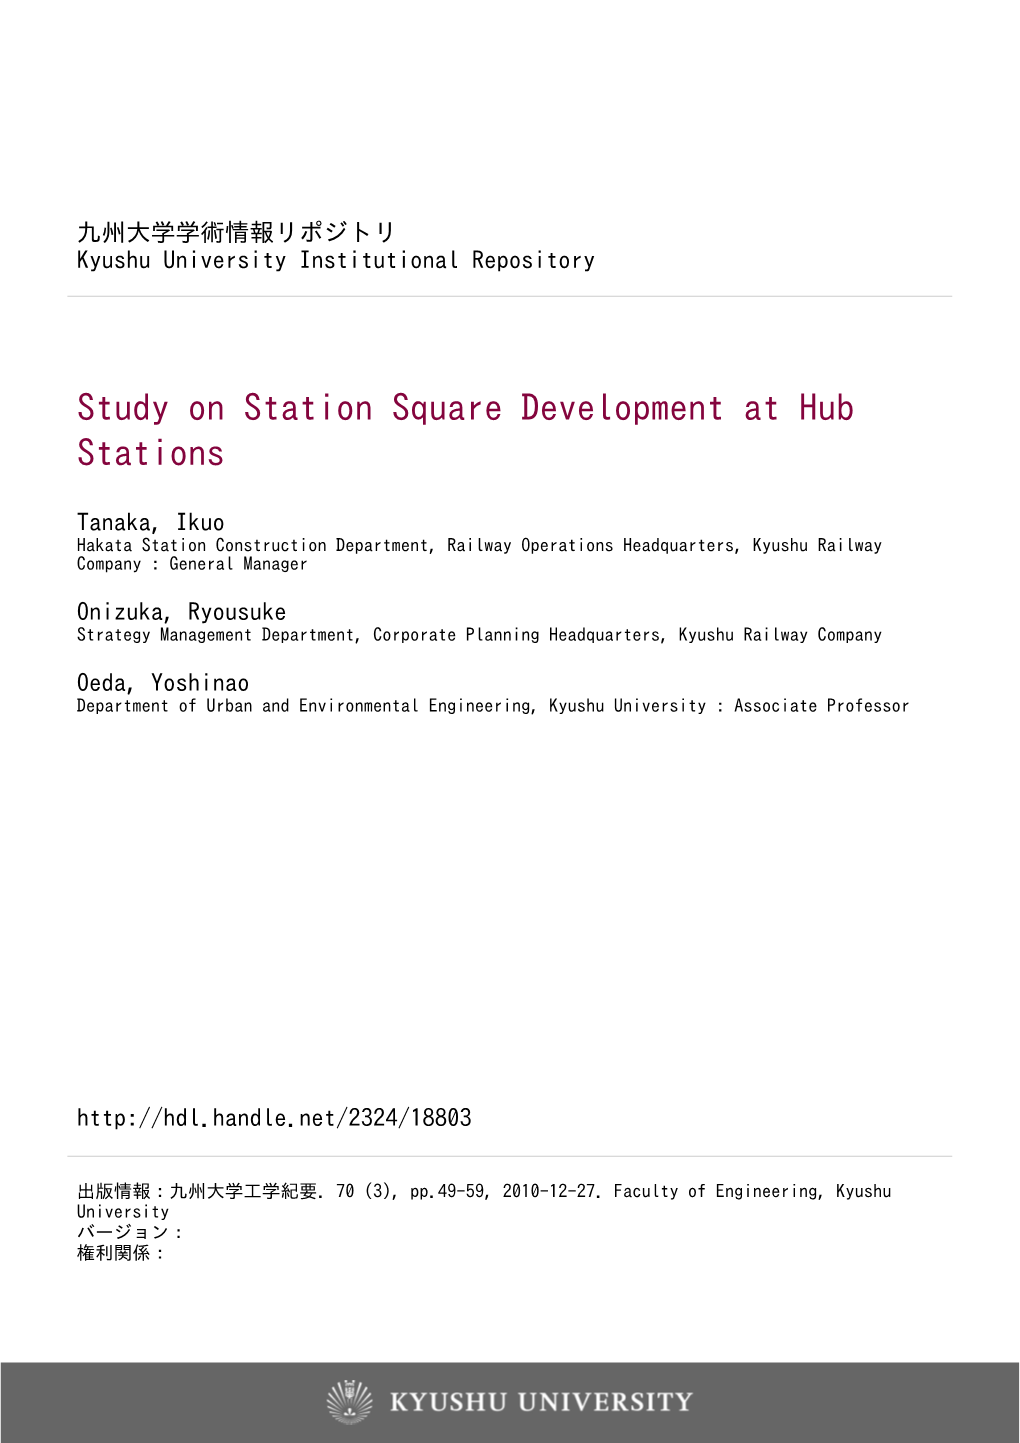 Study on Station Square Development at Hub Stations